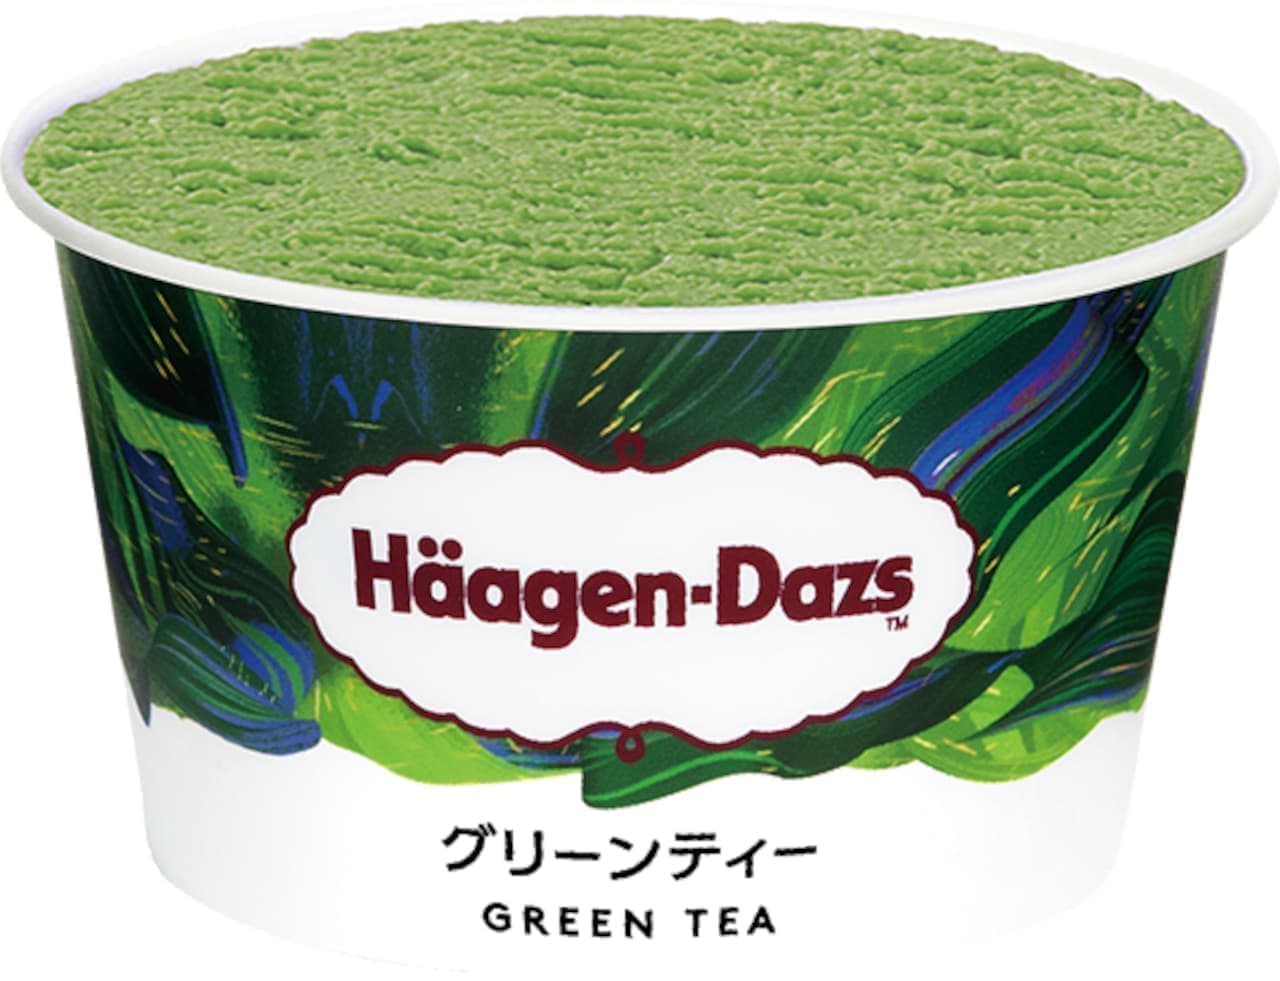 Haagen-Dazs "Classic Assortment (Vanilla, Rum Raisin, Green Tea)" Green Tea